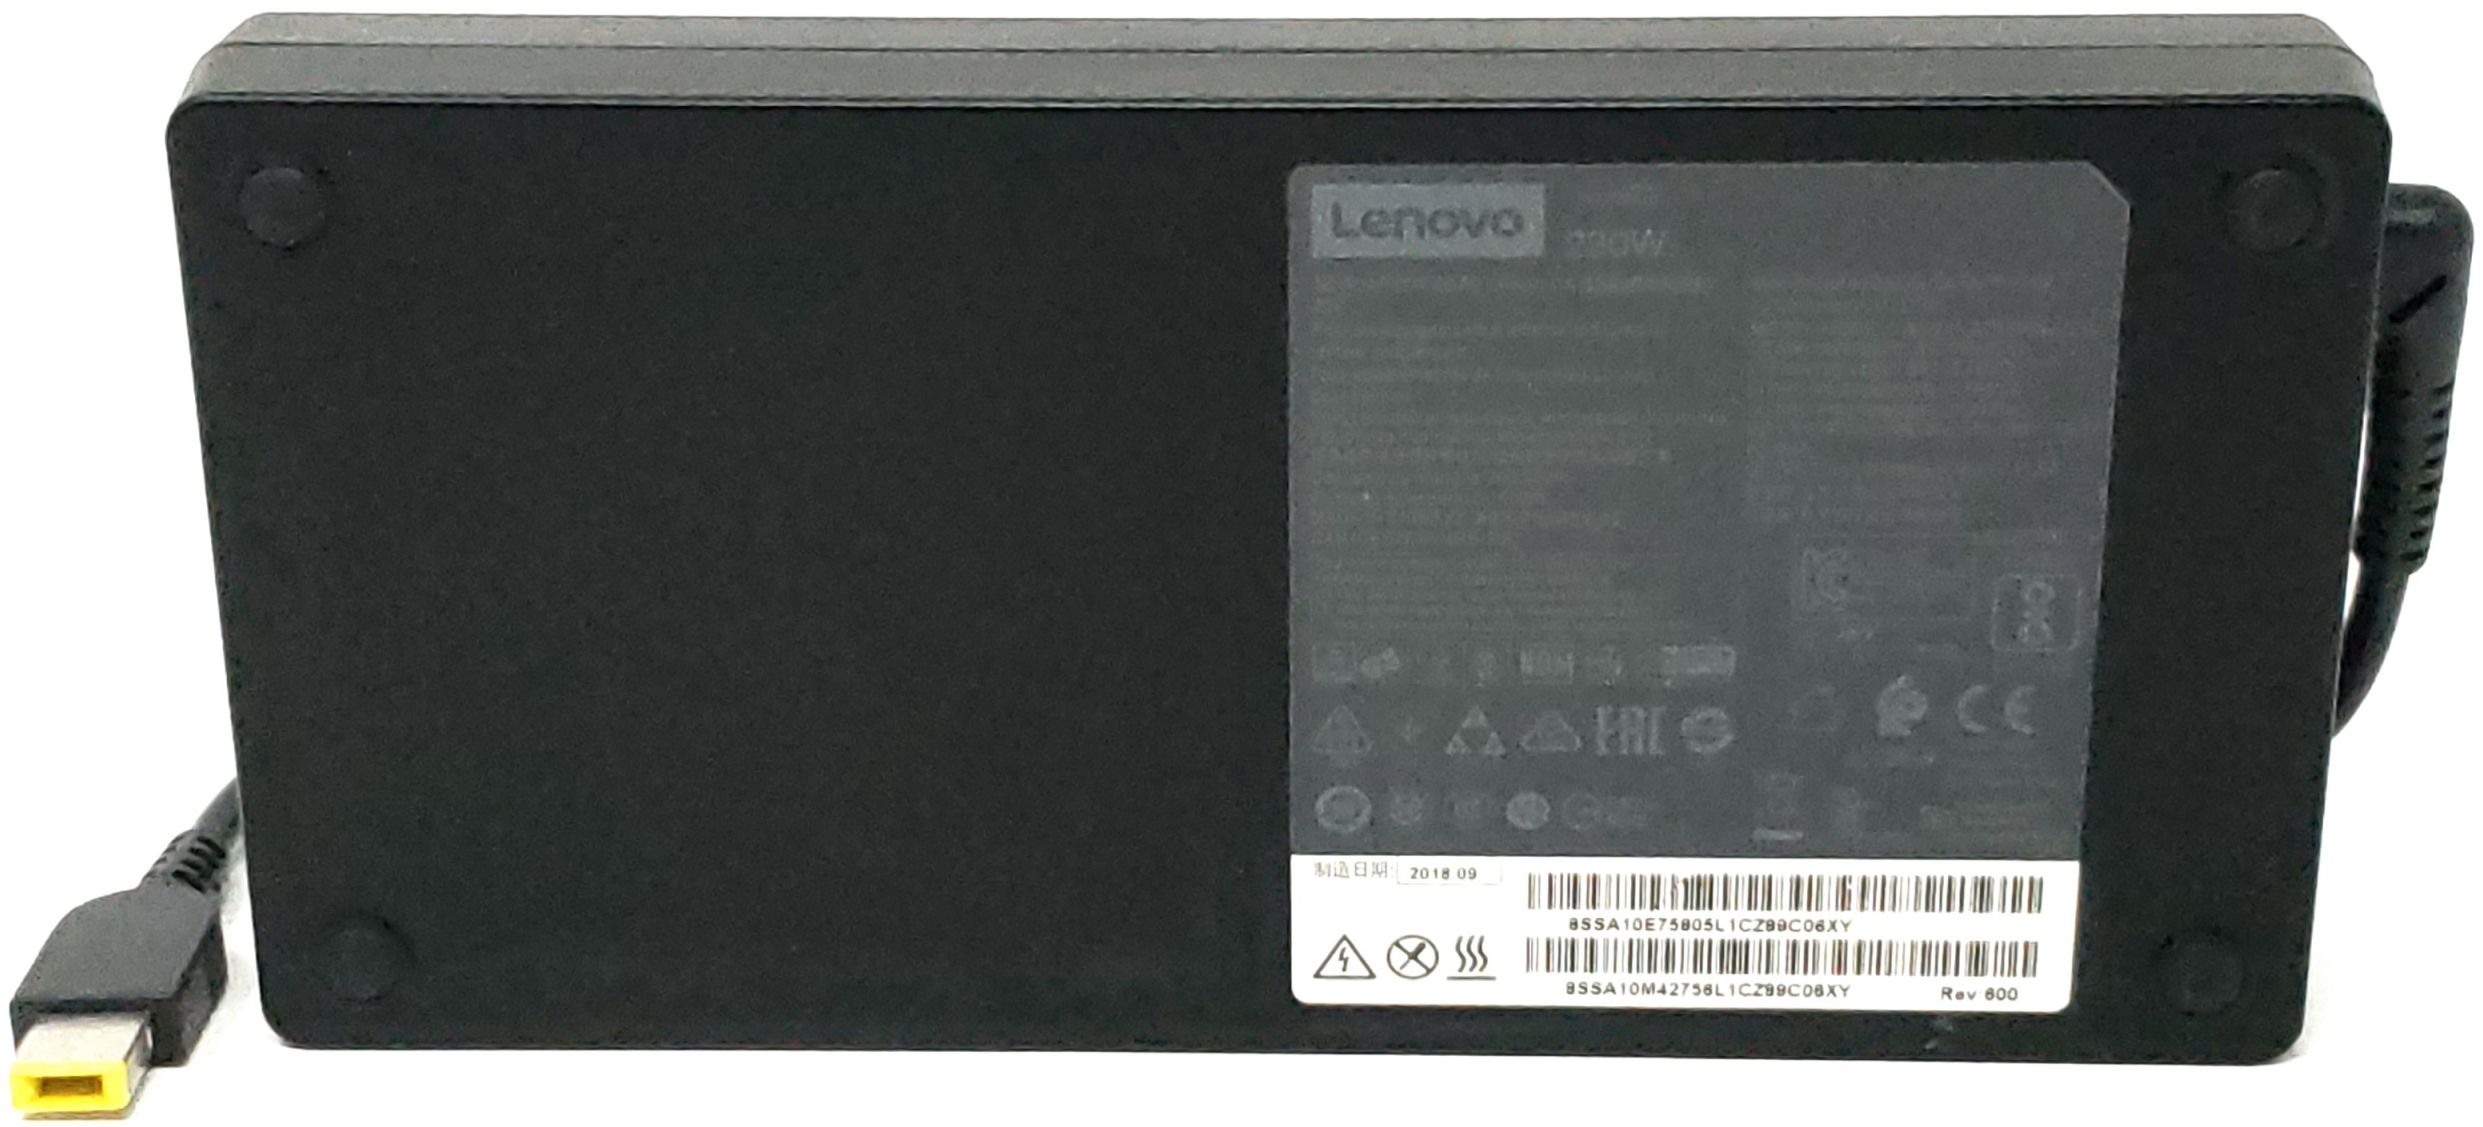 230W AC Adapter for Lenovo Laptop: Lenovo Legion 5 Charger